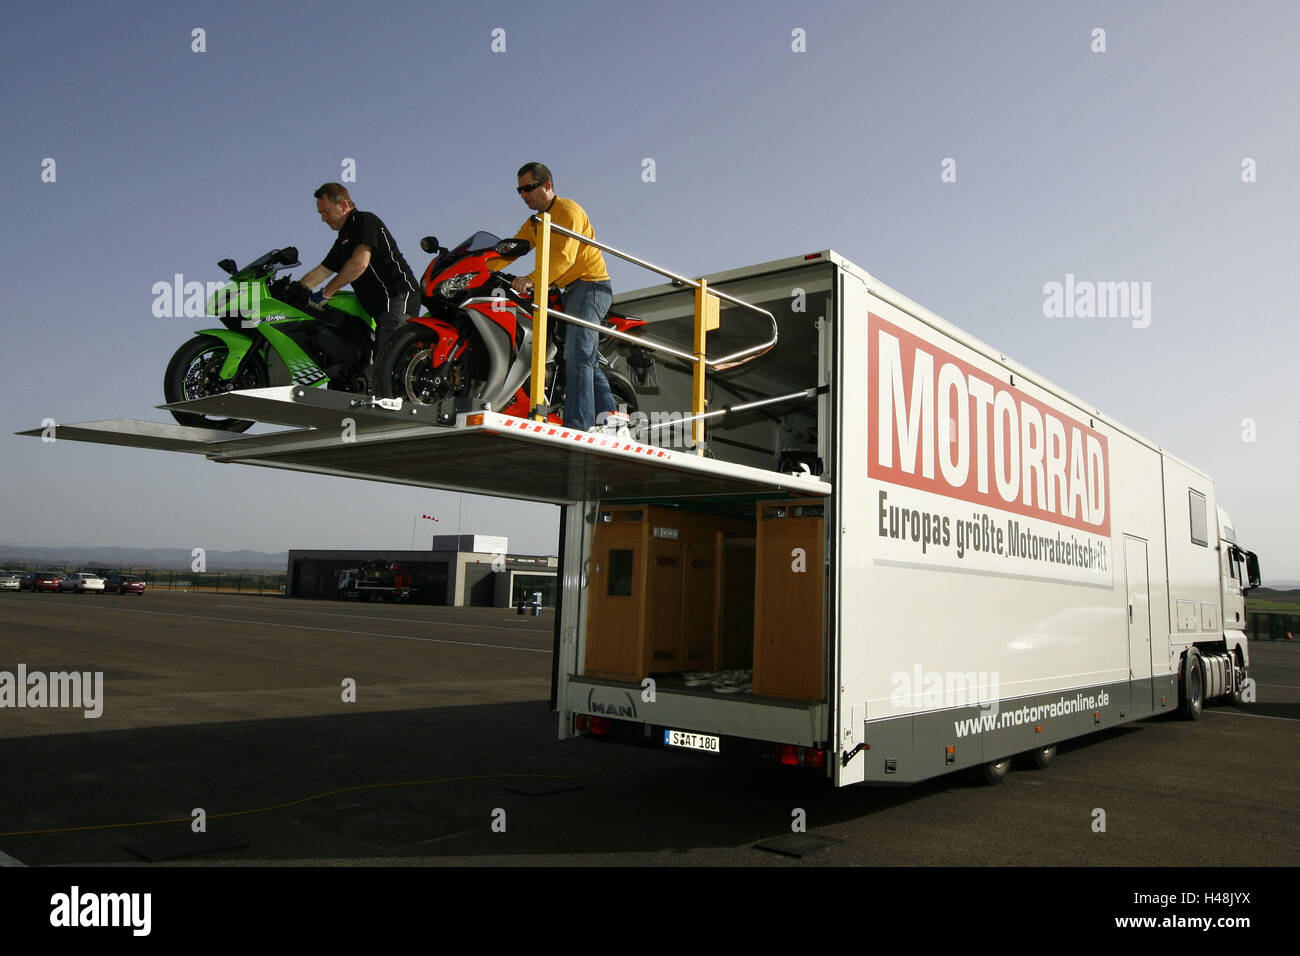 Transporte de motos fotografías e imágenes de alta resolución - Alamy